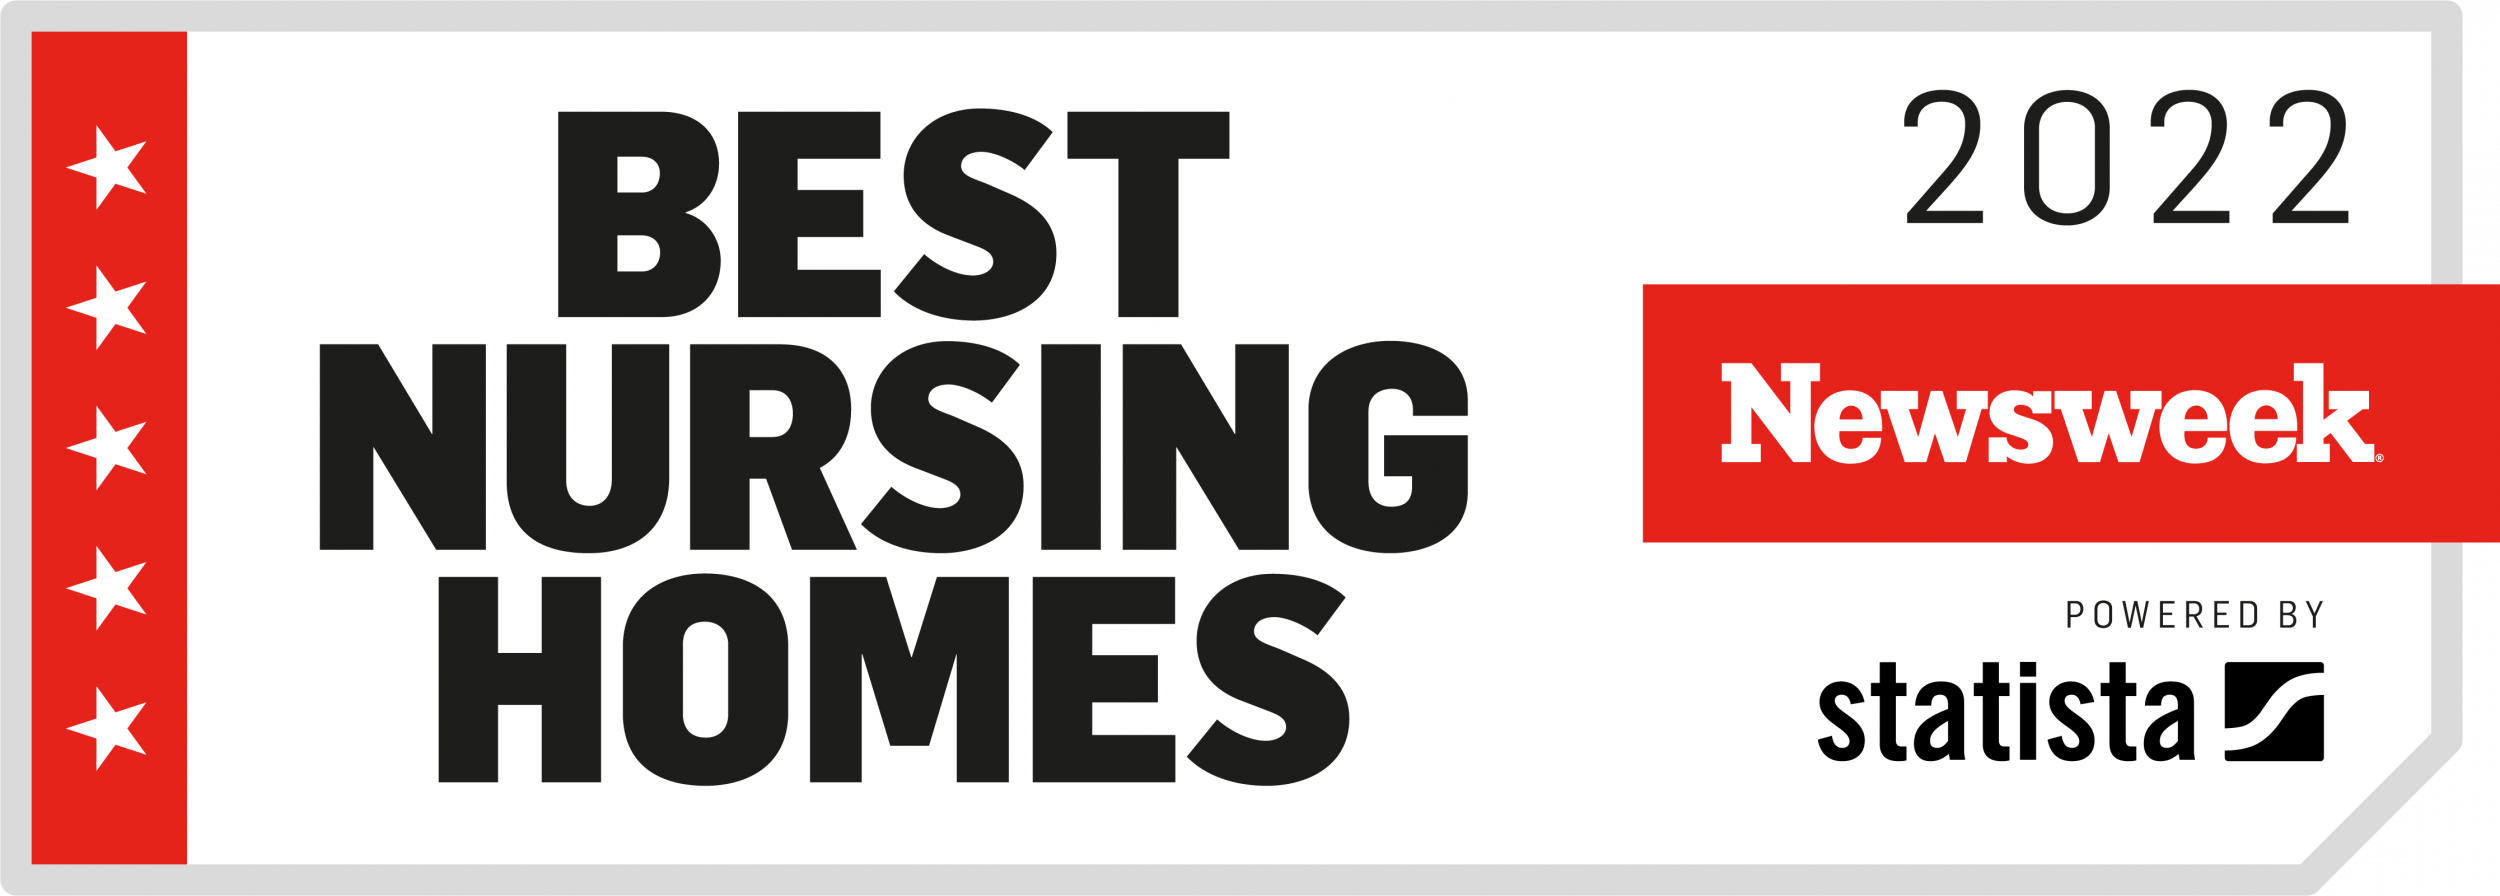 Best Nursing Homes 2022